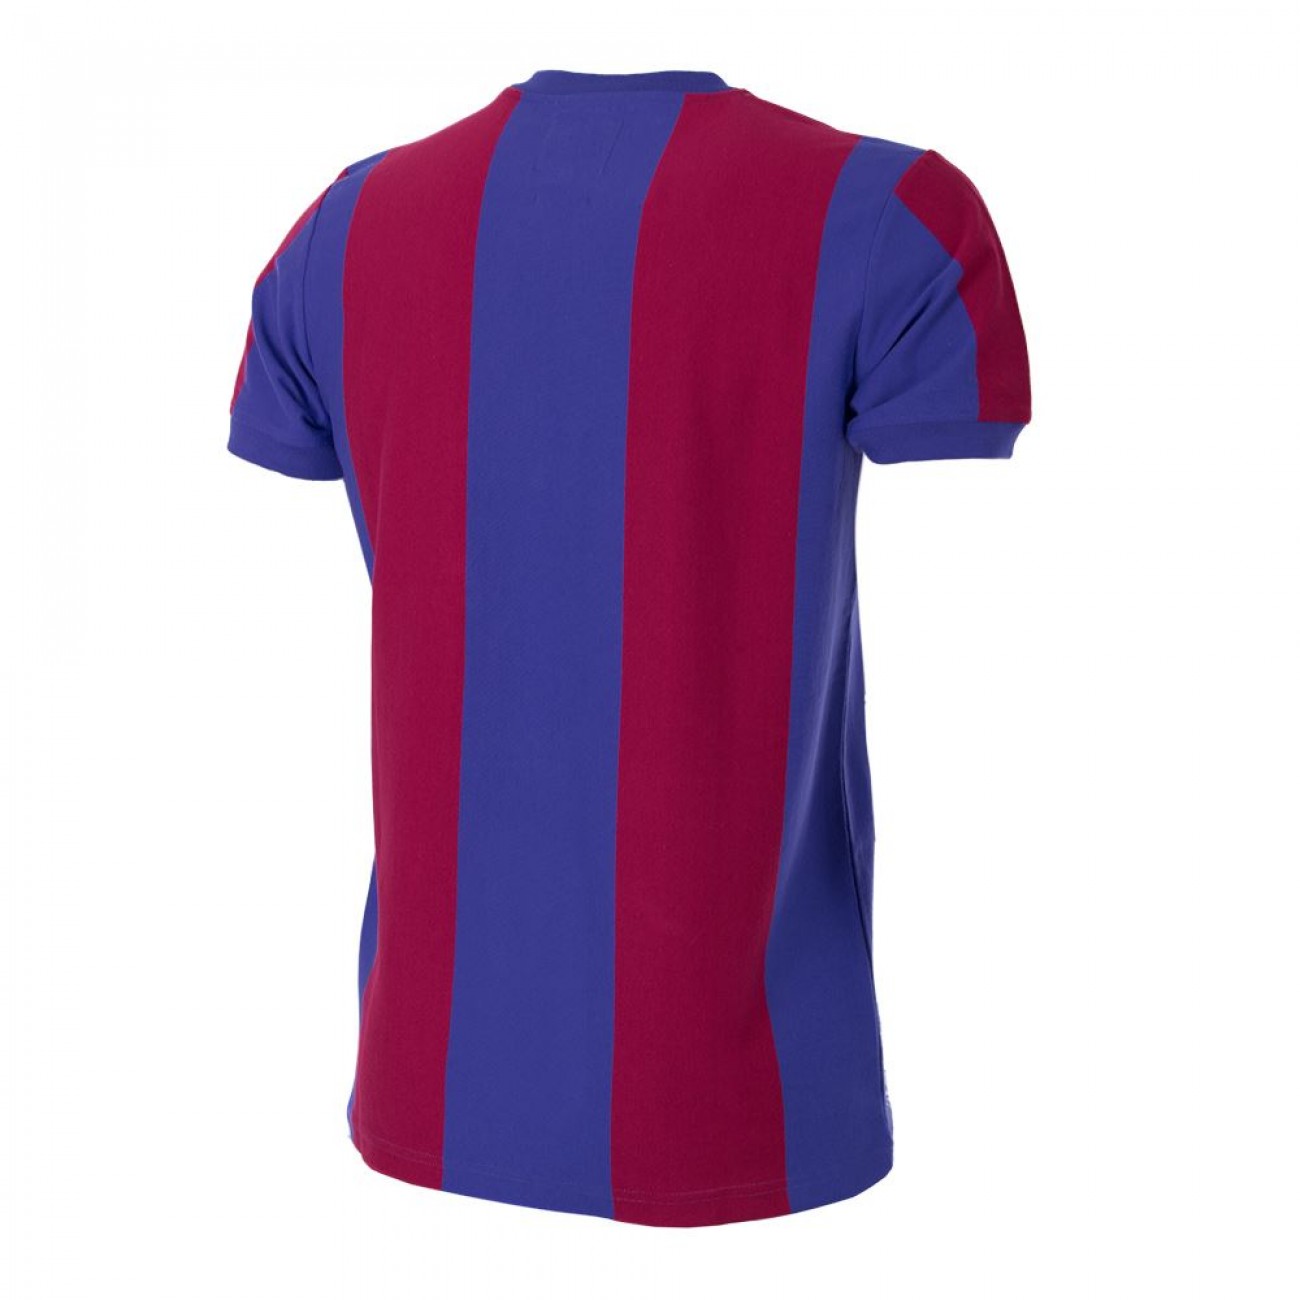 cuatro veces Acelerar Retirarse Camiseta retro oficial FC Barcelona Cruyff | Retrofootball®